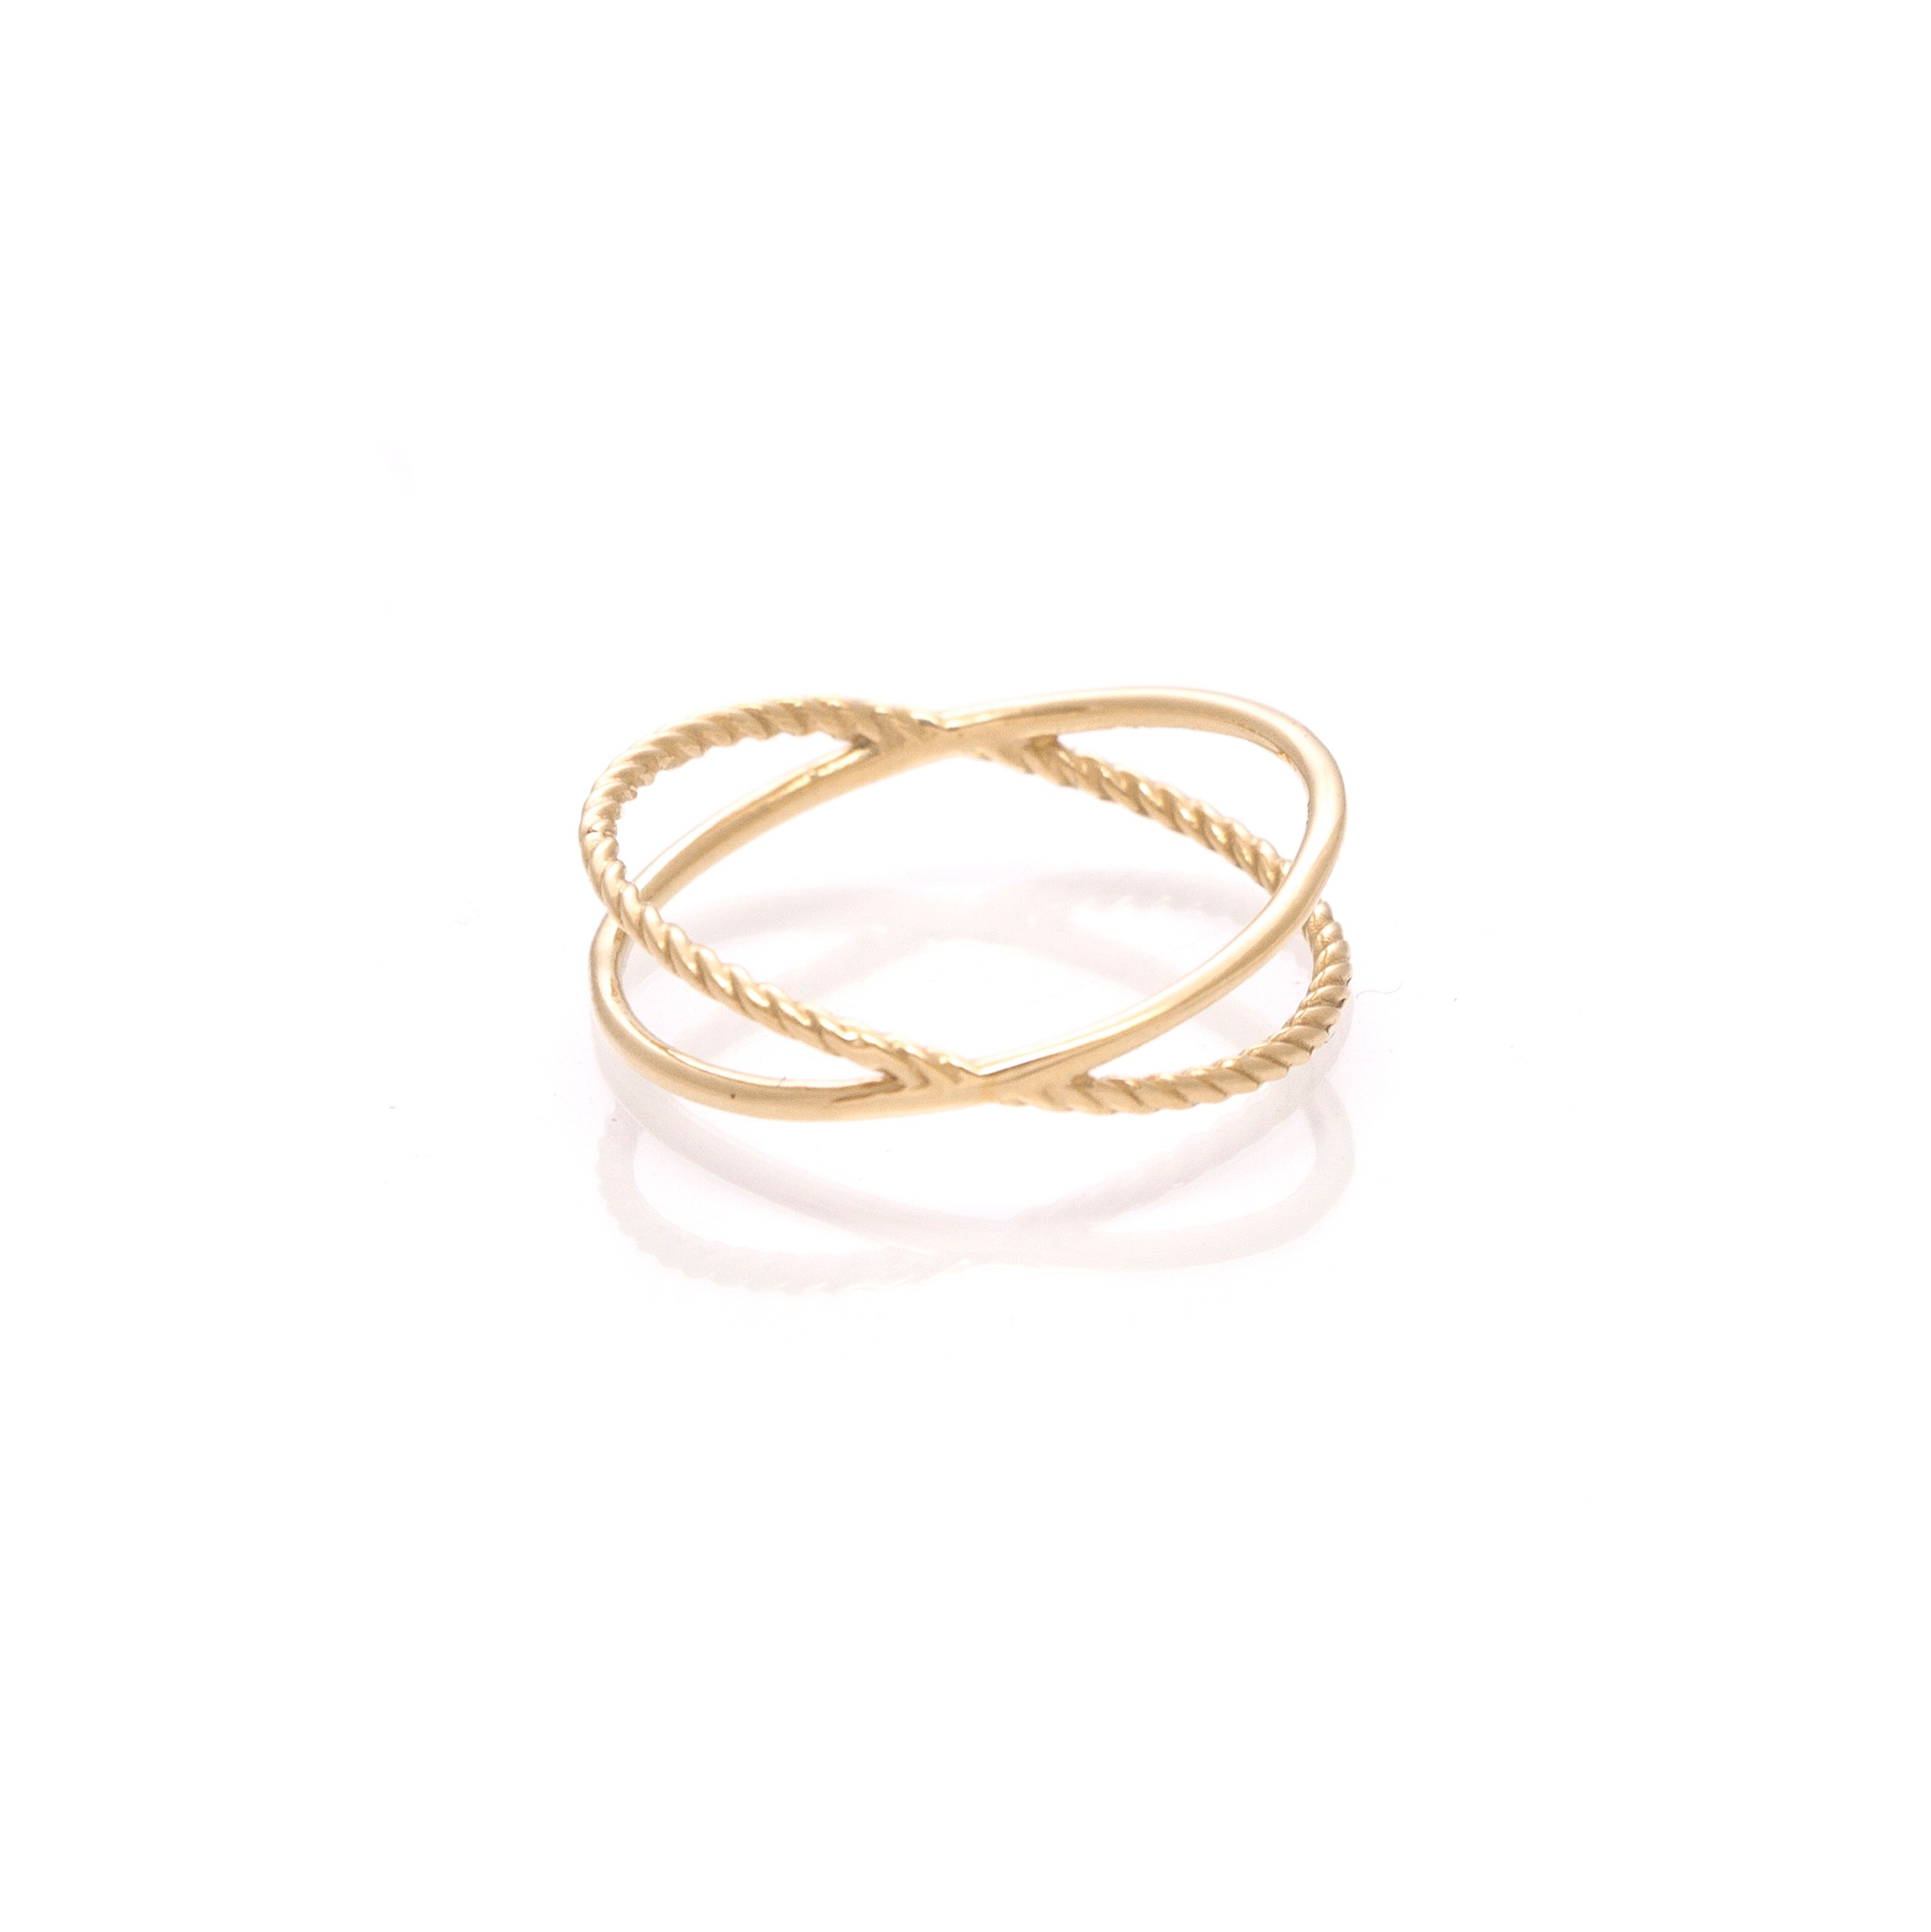 Claudia Navarro Jewelry- Ring Cross / Gold